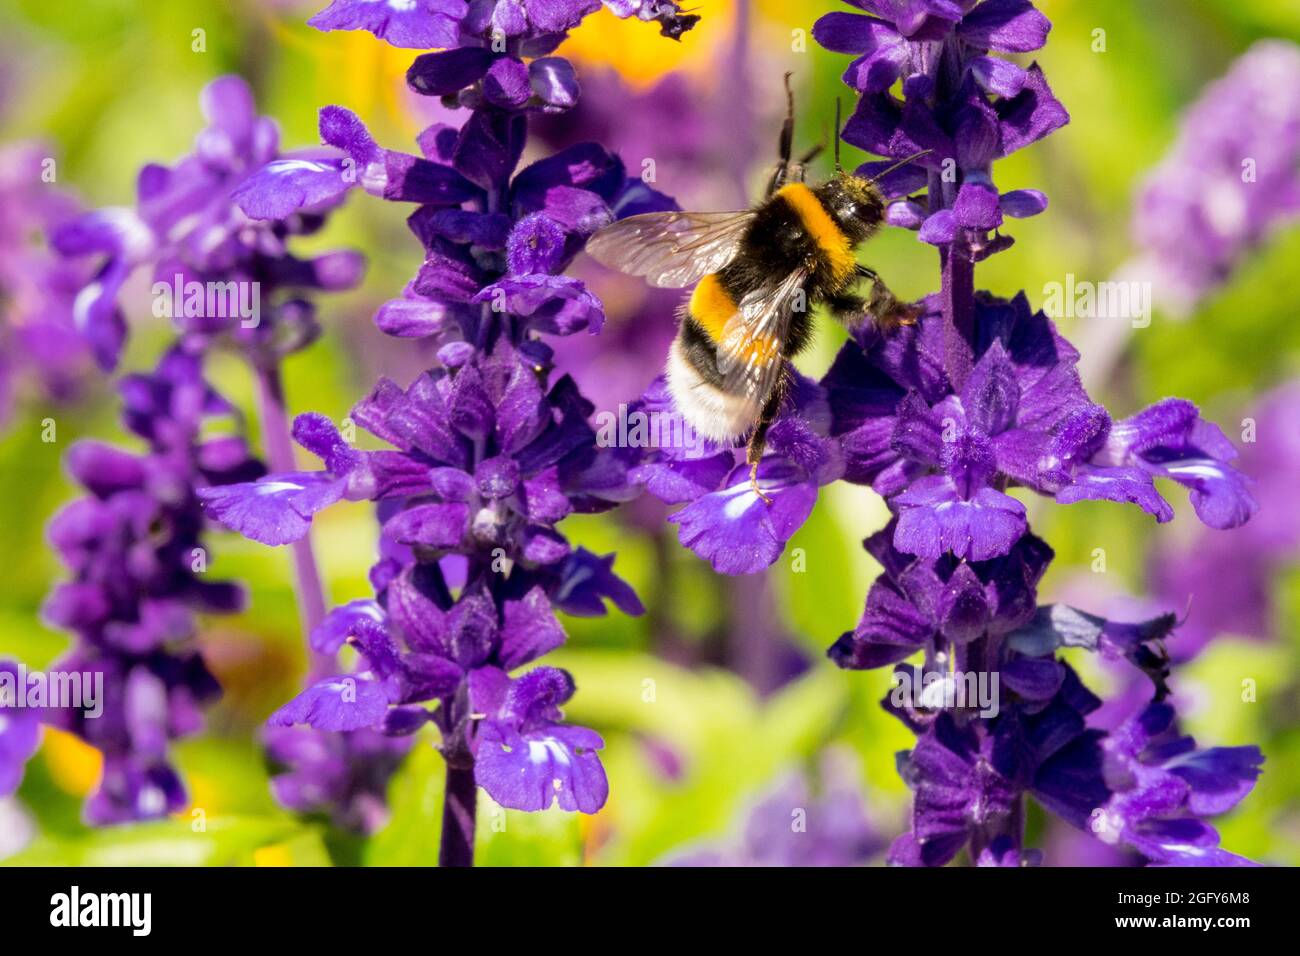 Bombus terrestris,  Buff-tailed bumblebee close up on flower Salvia Stock Photo